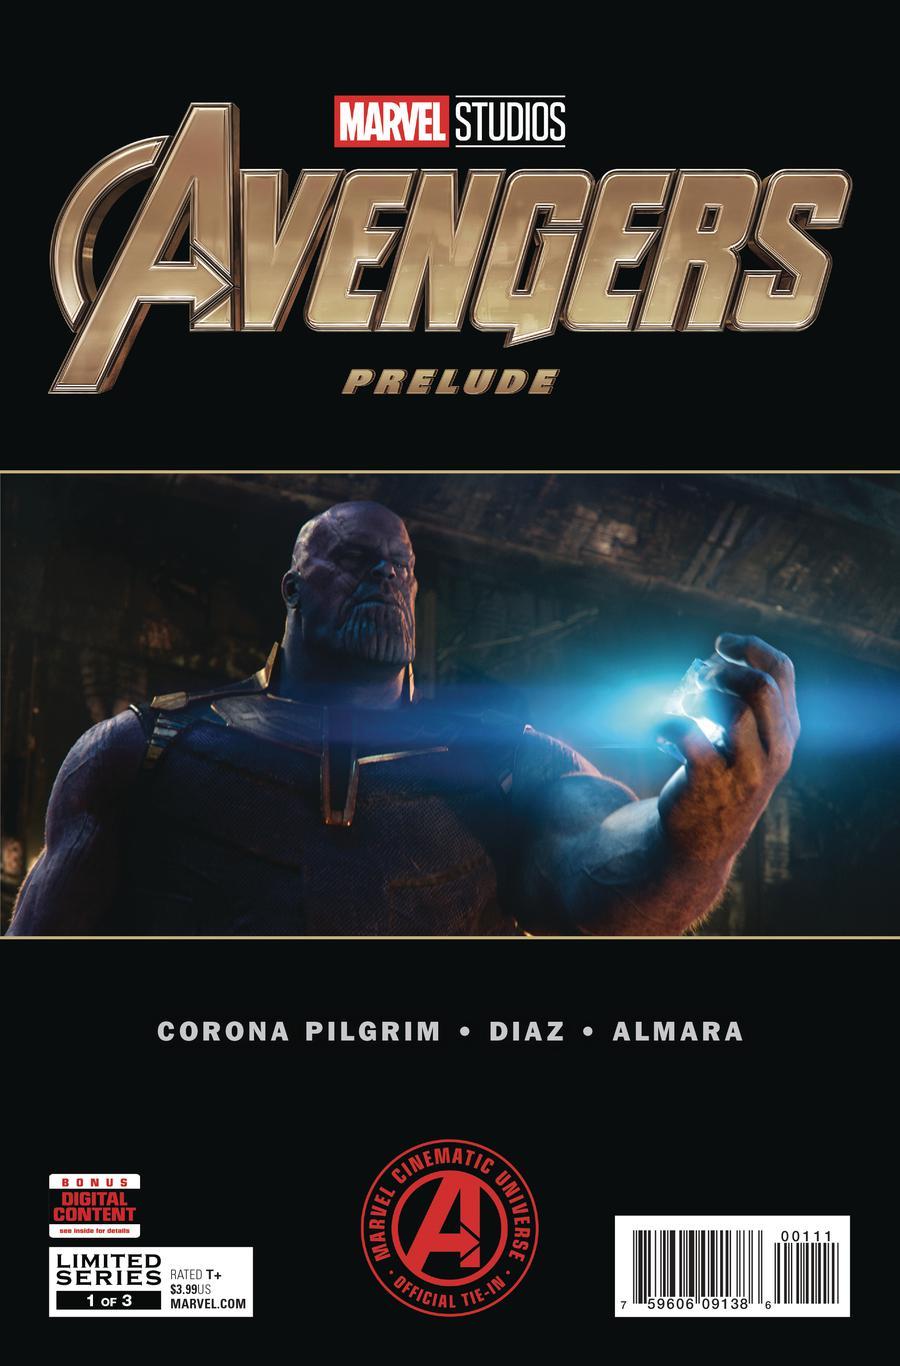 Marvels Avengers Untitled Prelude Vol. 1 #1